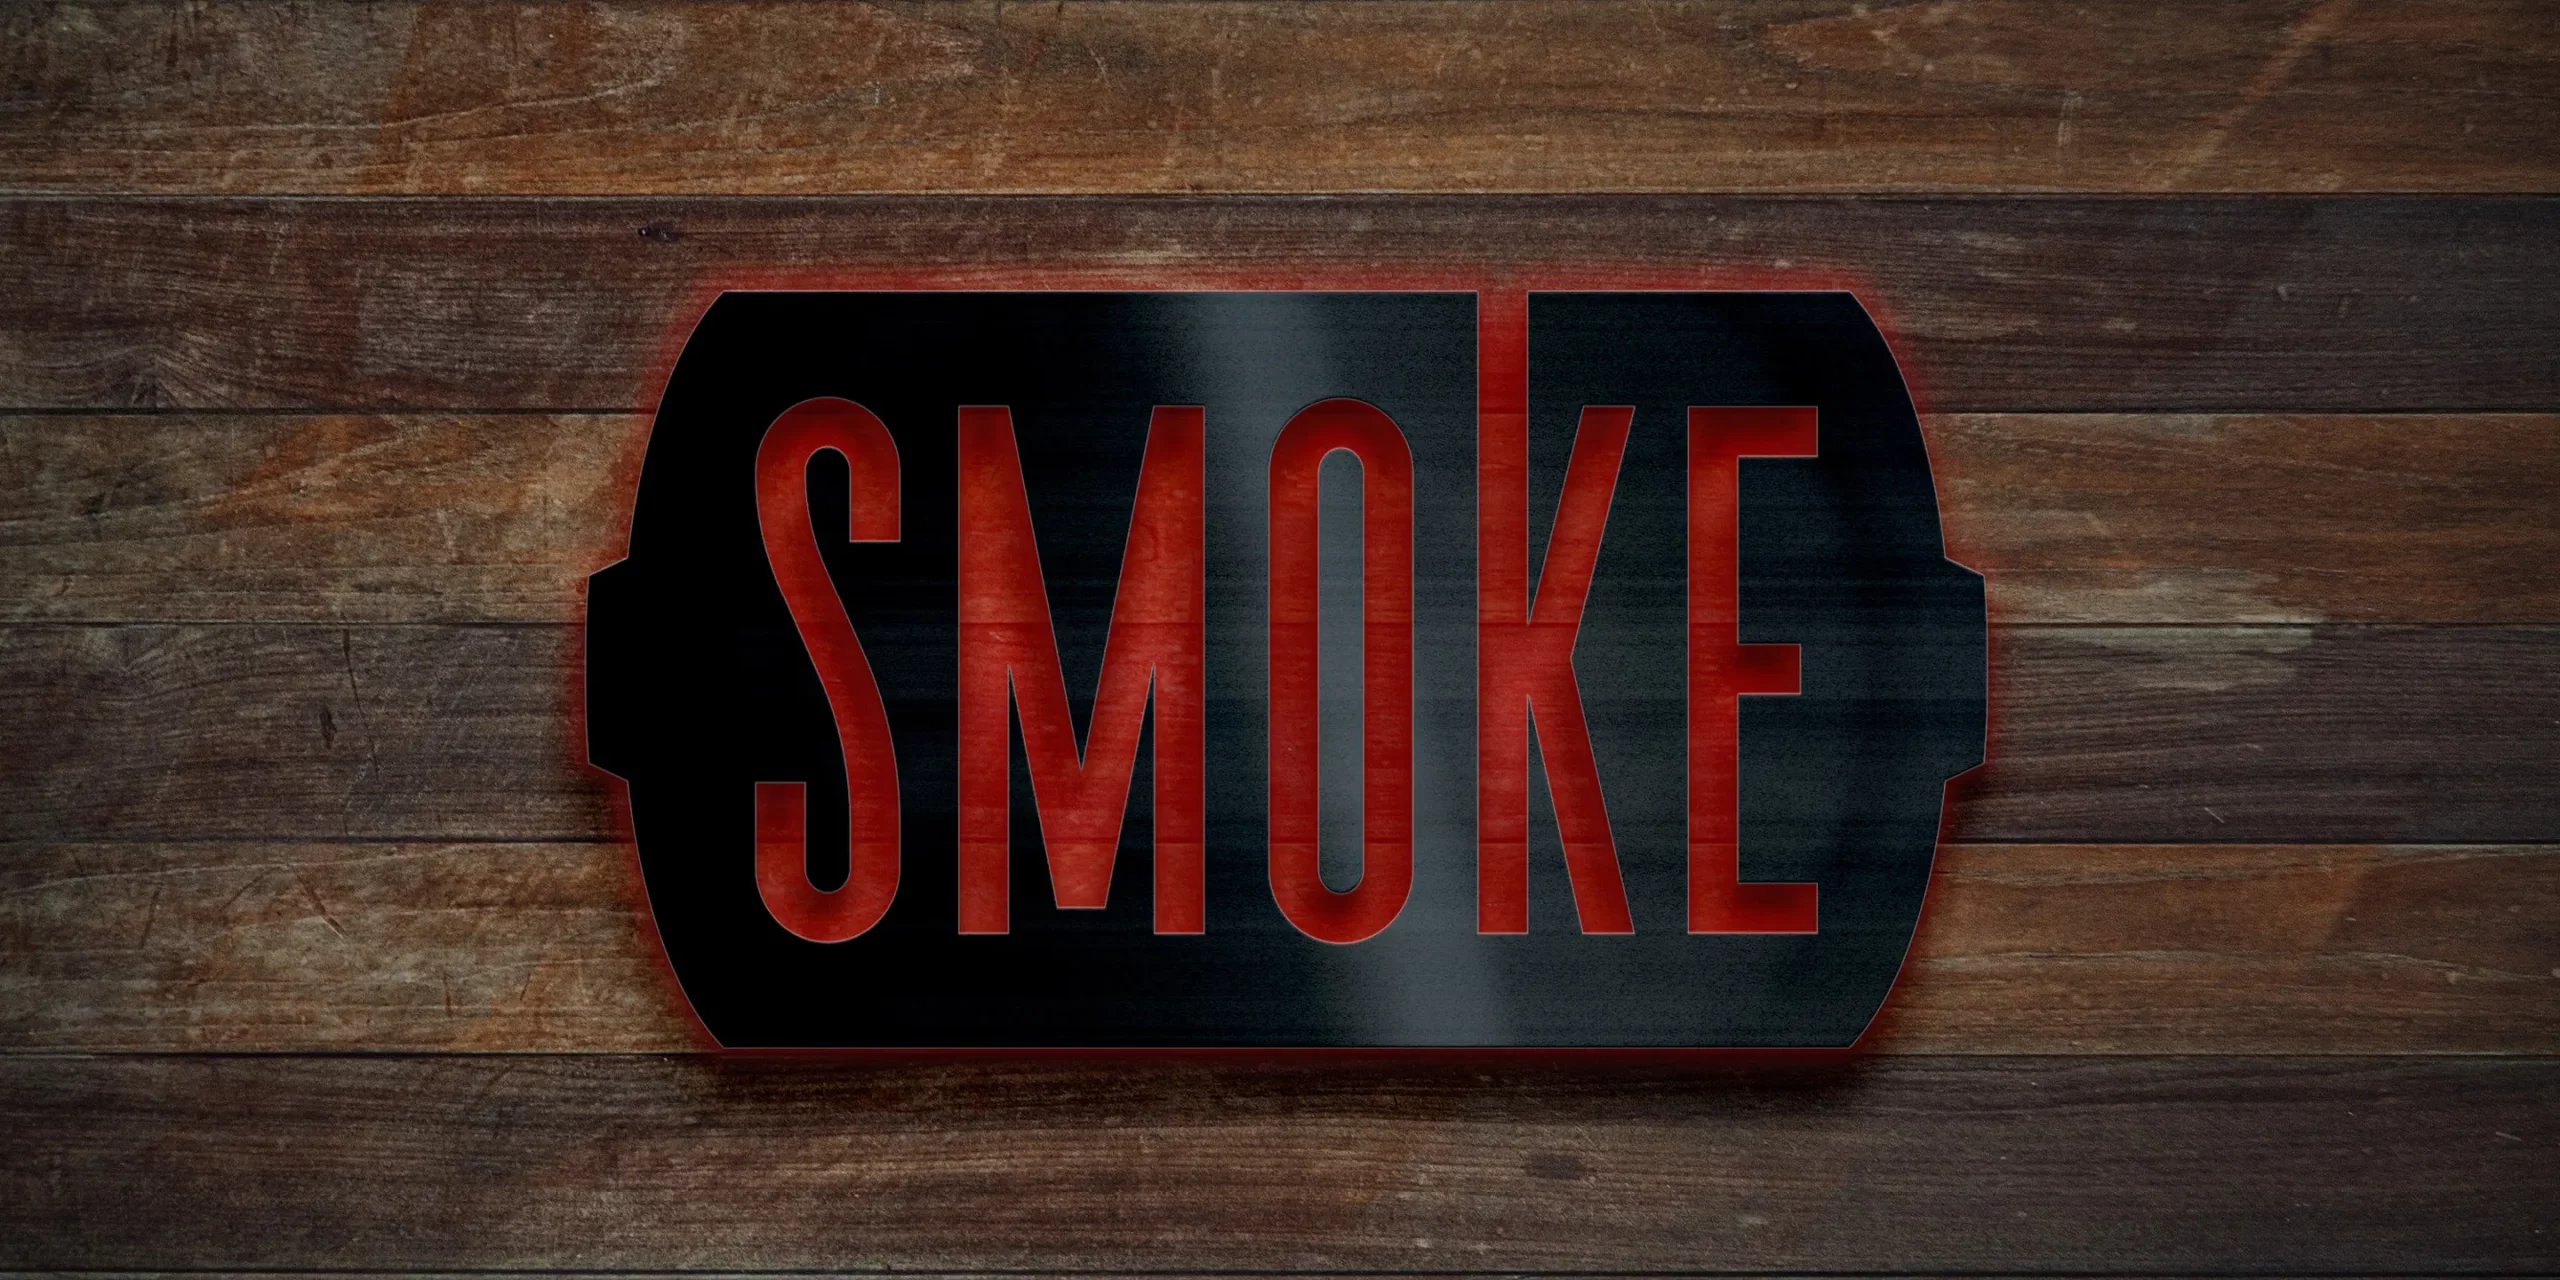 Smoke, Barbeque Restaurant Brand, Sign